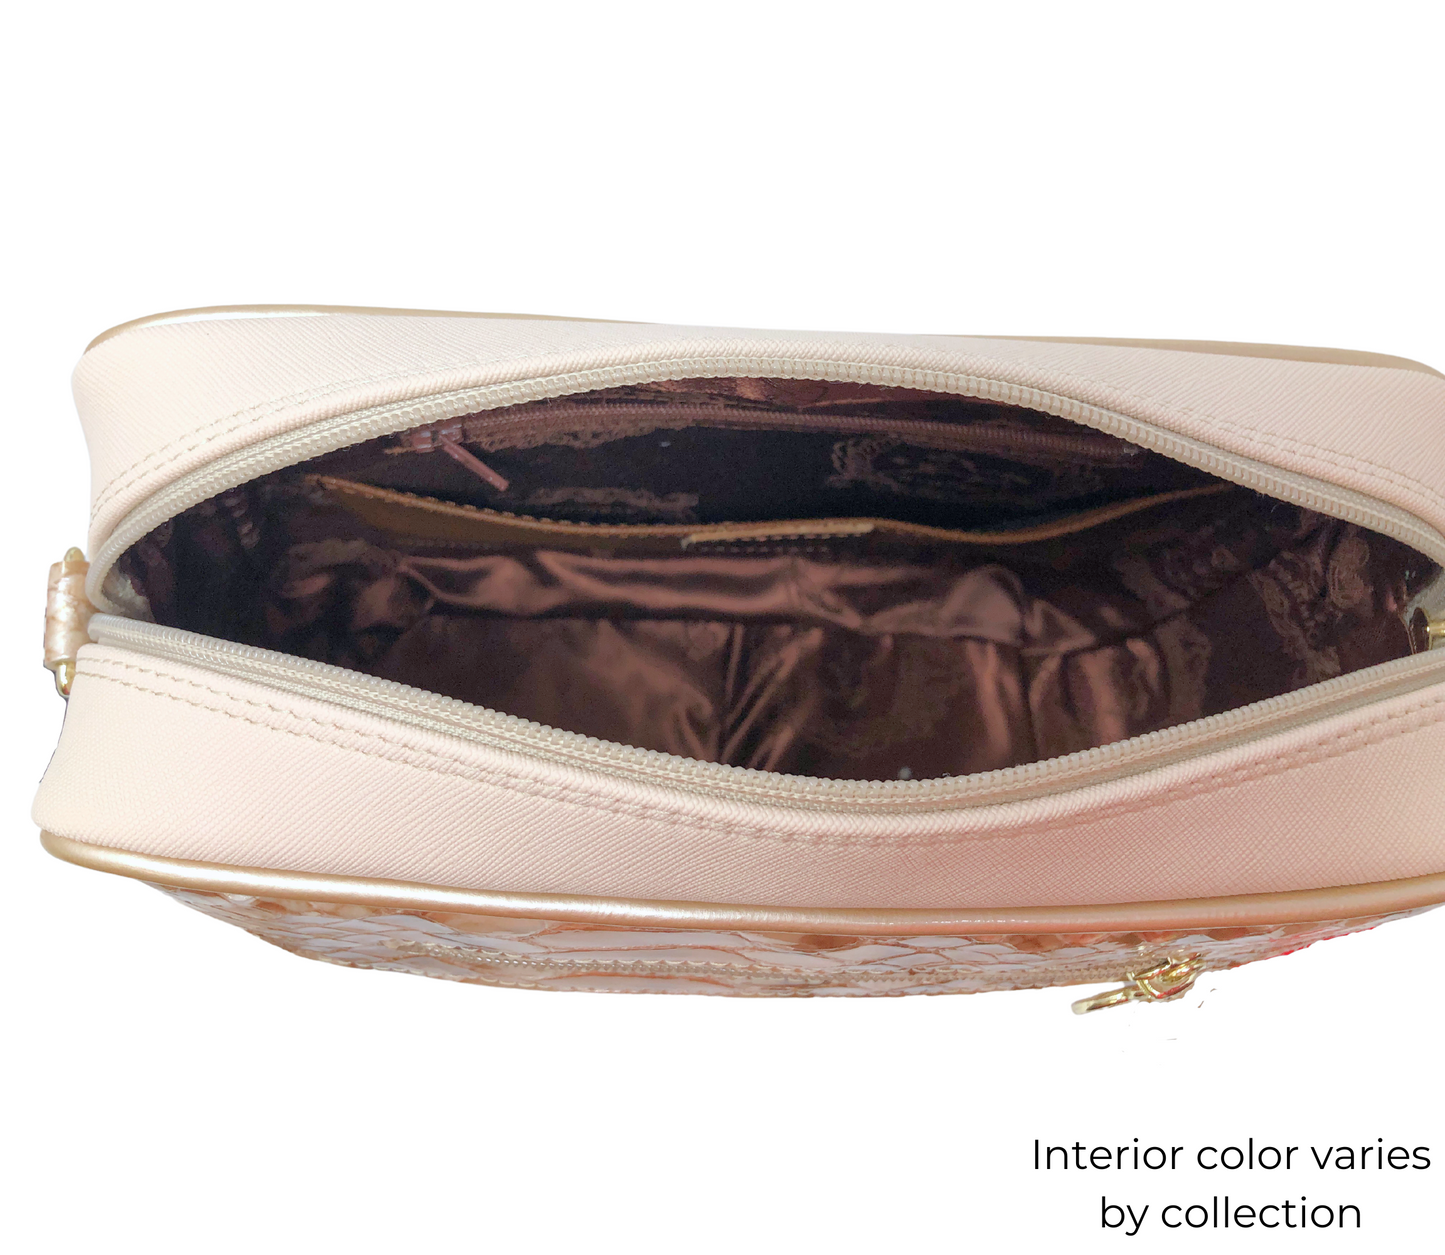 #color_ DarkRed White | Cavalinho Grace Crossbody Bag - DarkRed White - 18250251.05-Internal0251.05